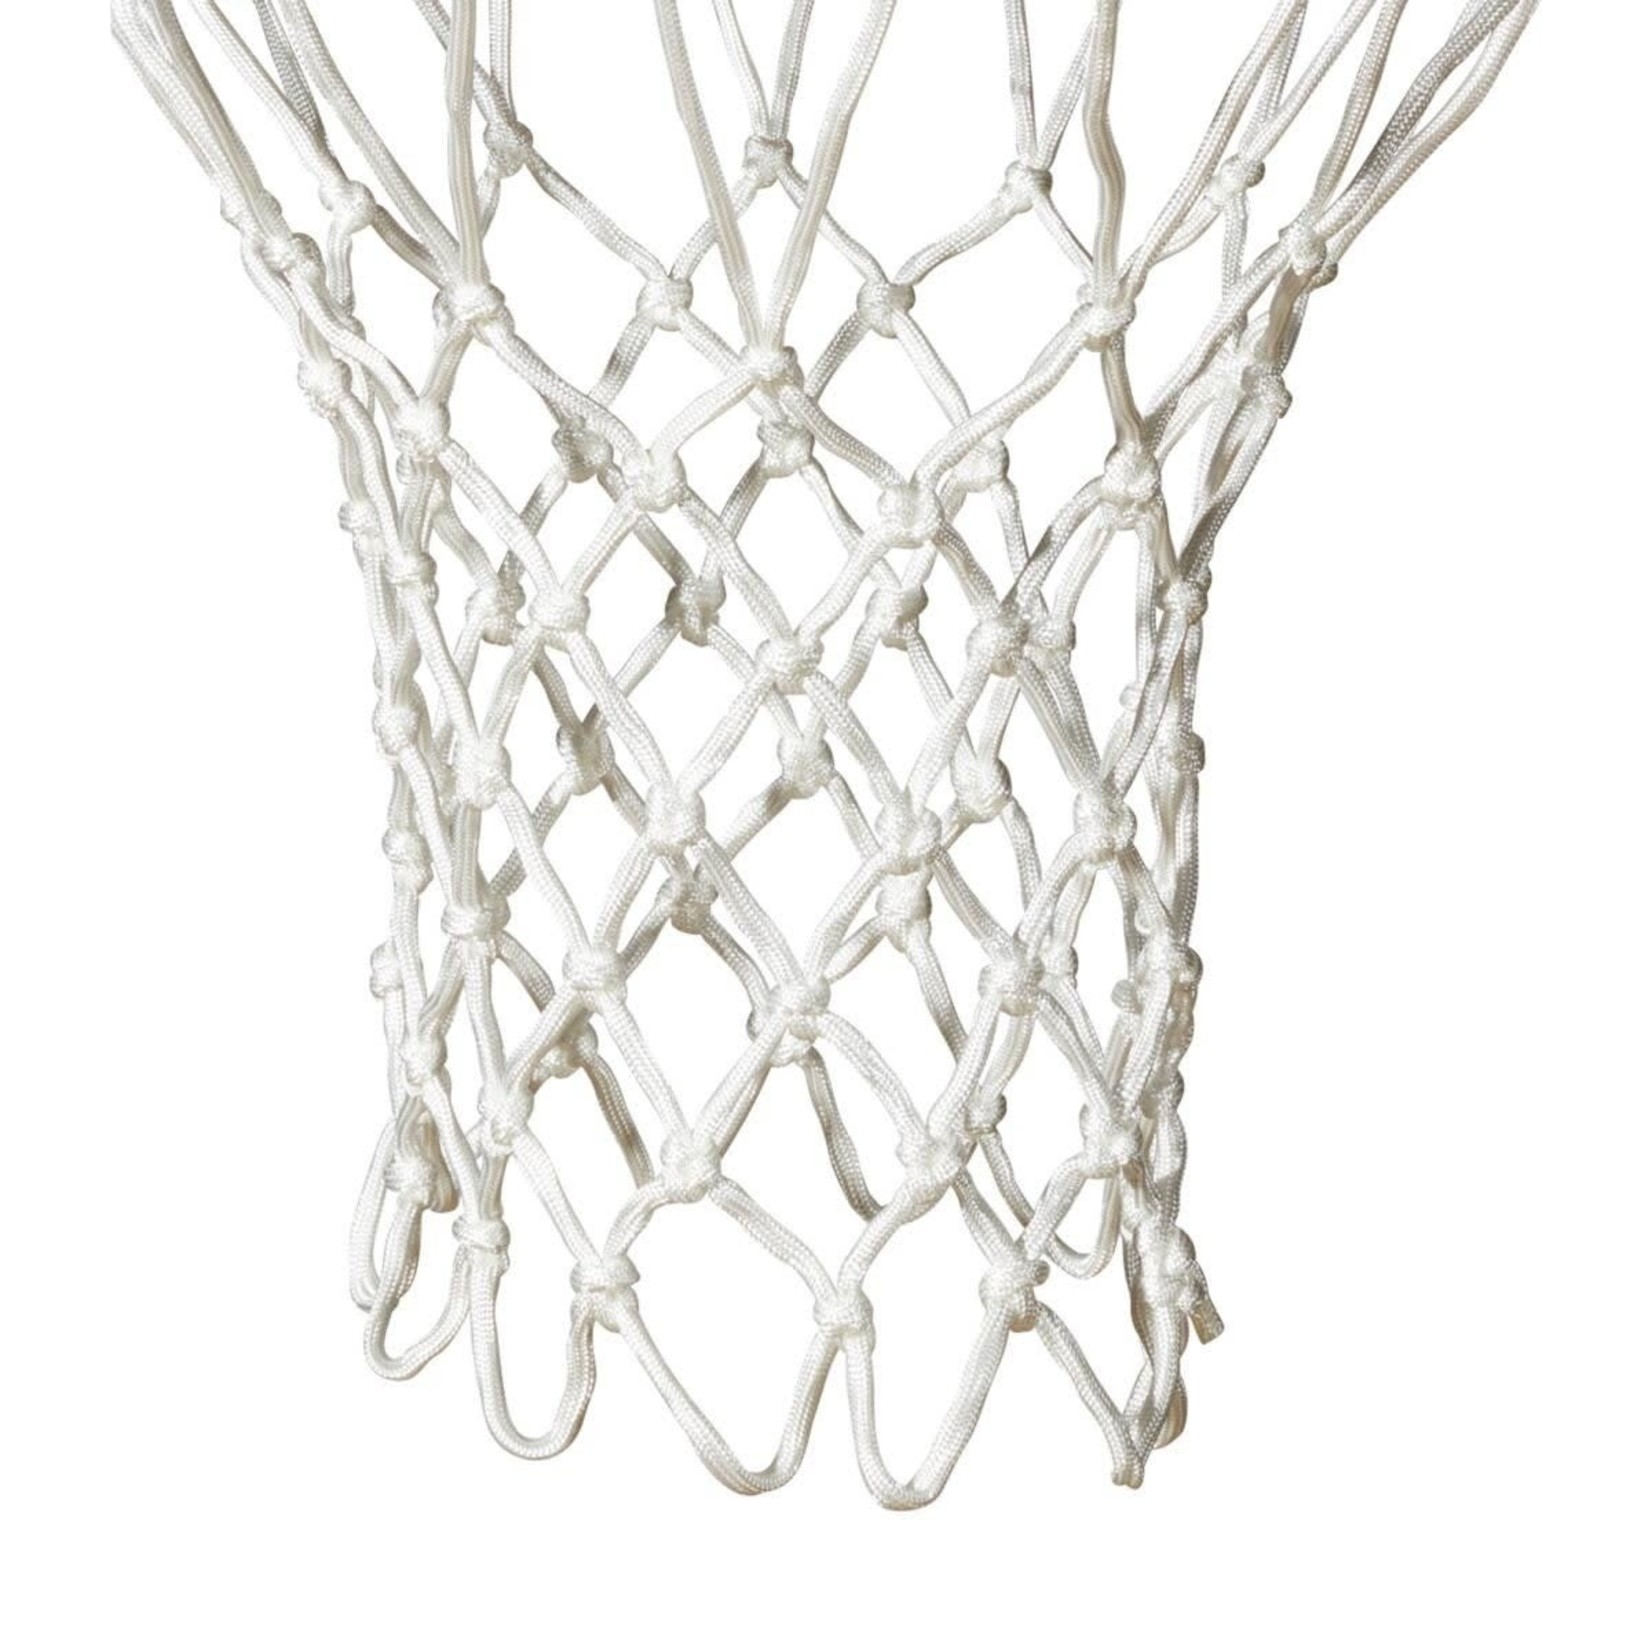 Wilson NBA Authentic Performance Basketball Net